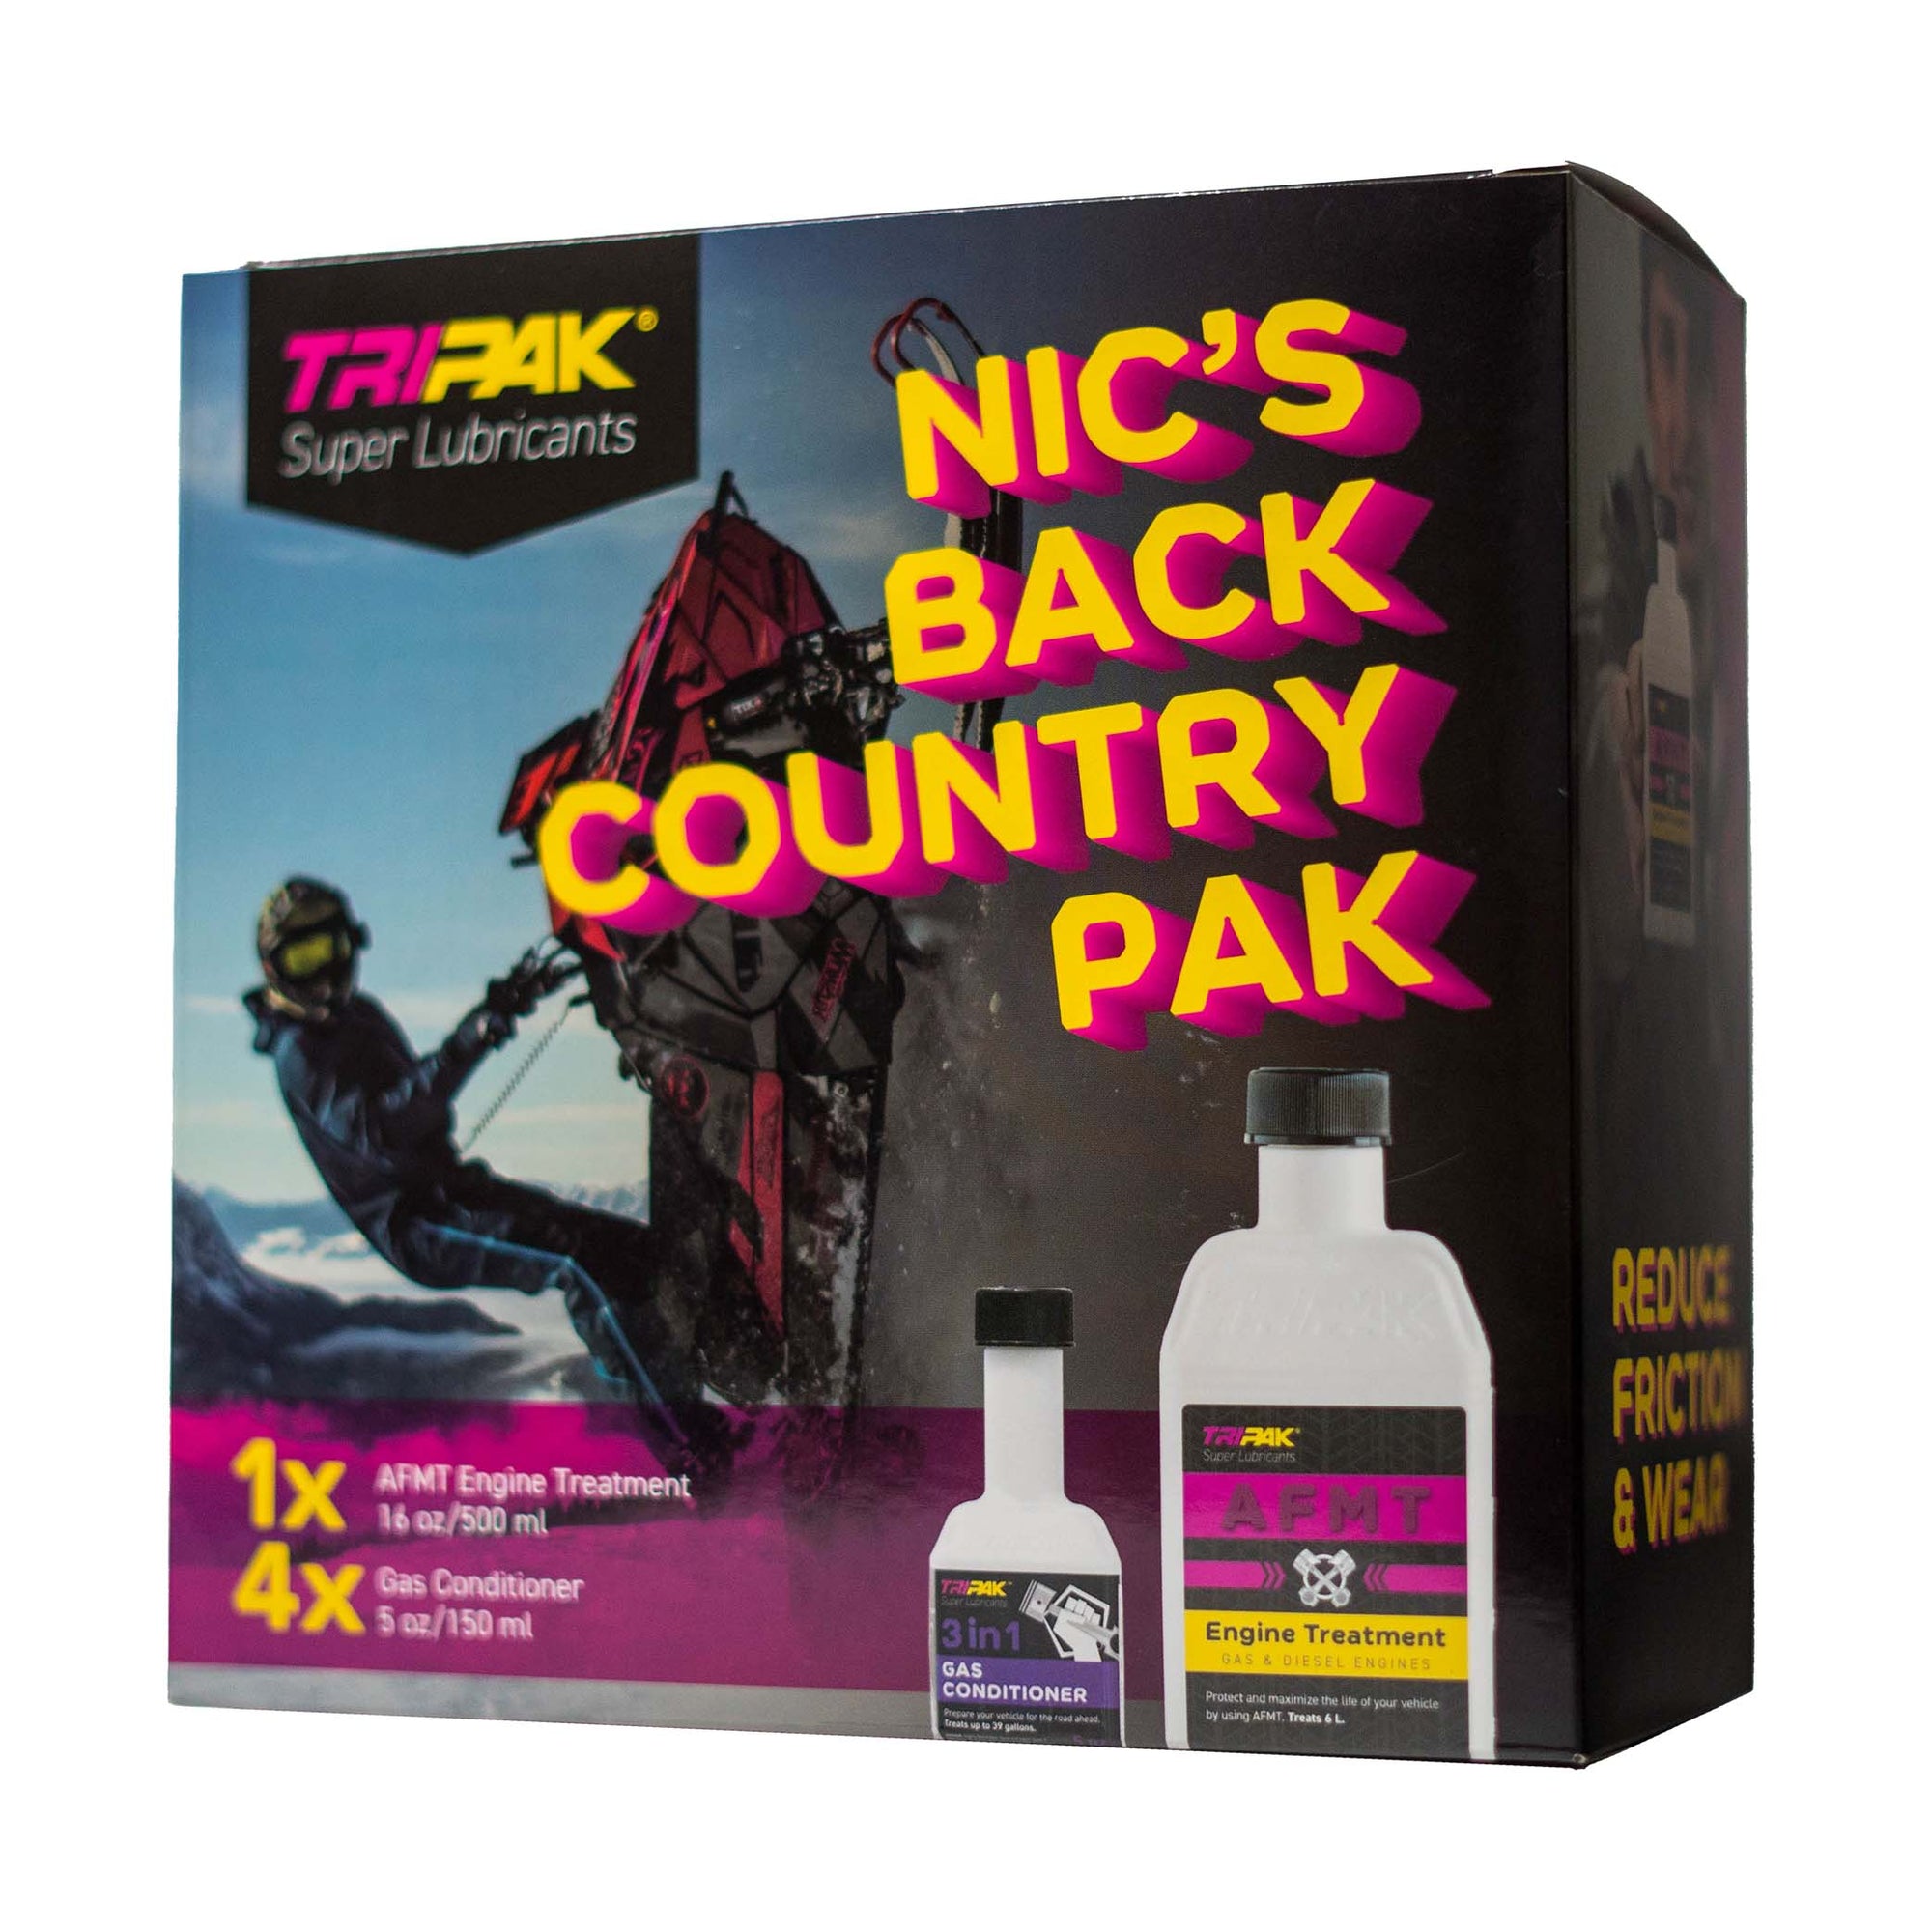 Tripak Super Lubricants Nic's Back Country Pak